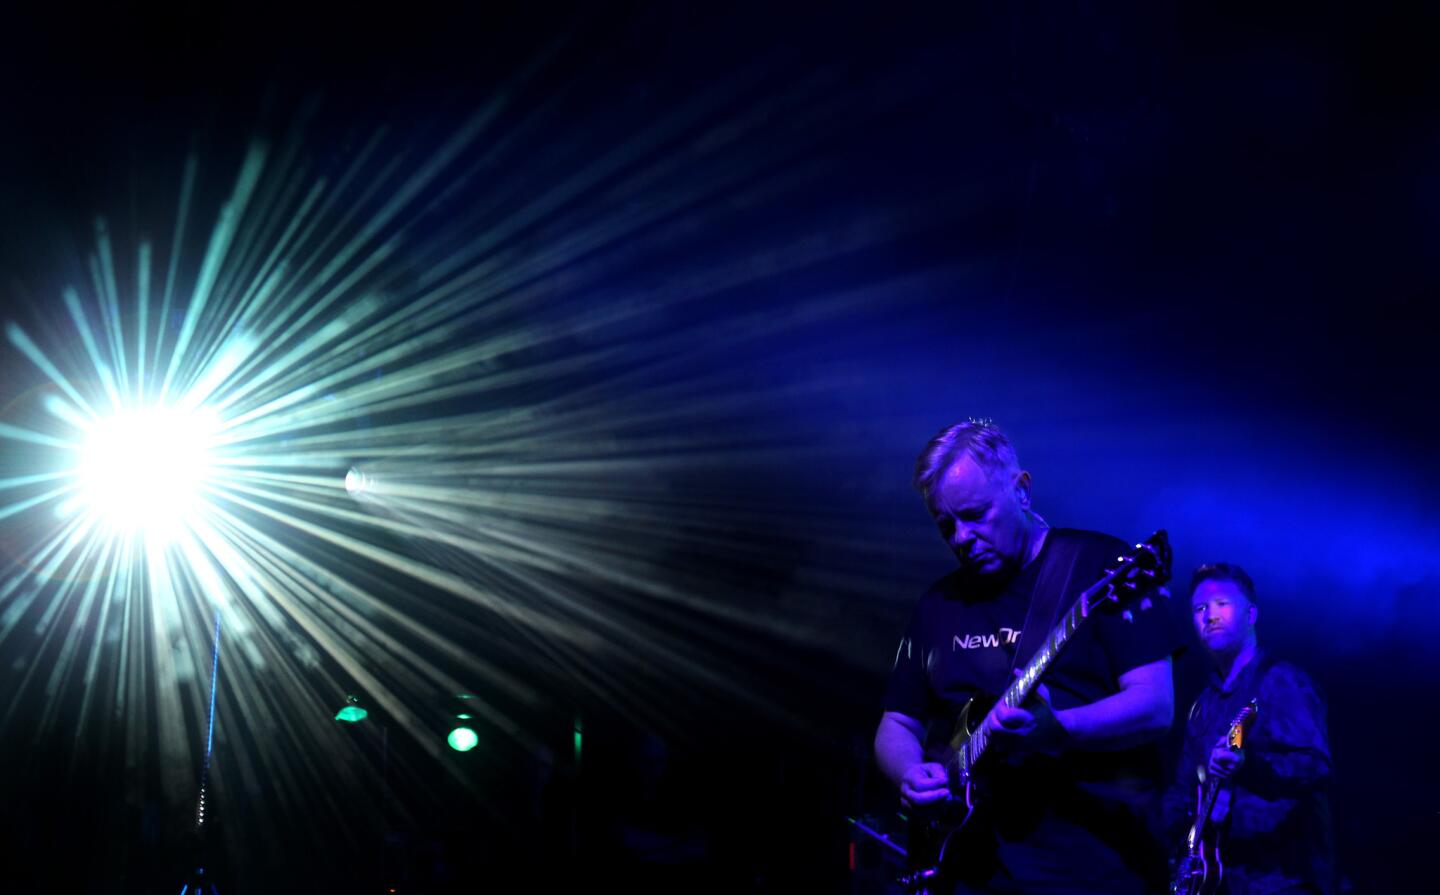 Guitarist-singer Bernard Sumner, left, fronts New Order during a performance at the Greek Theatre in Los Angeles.